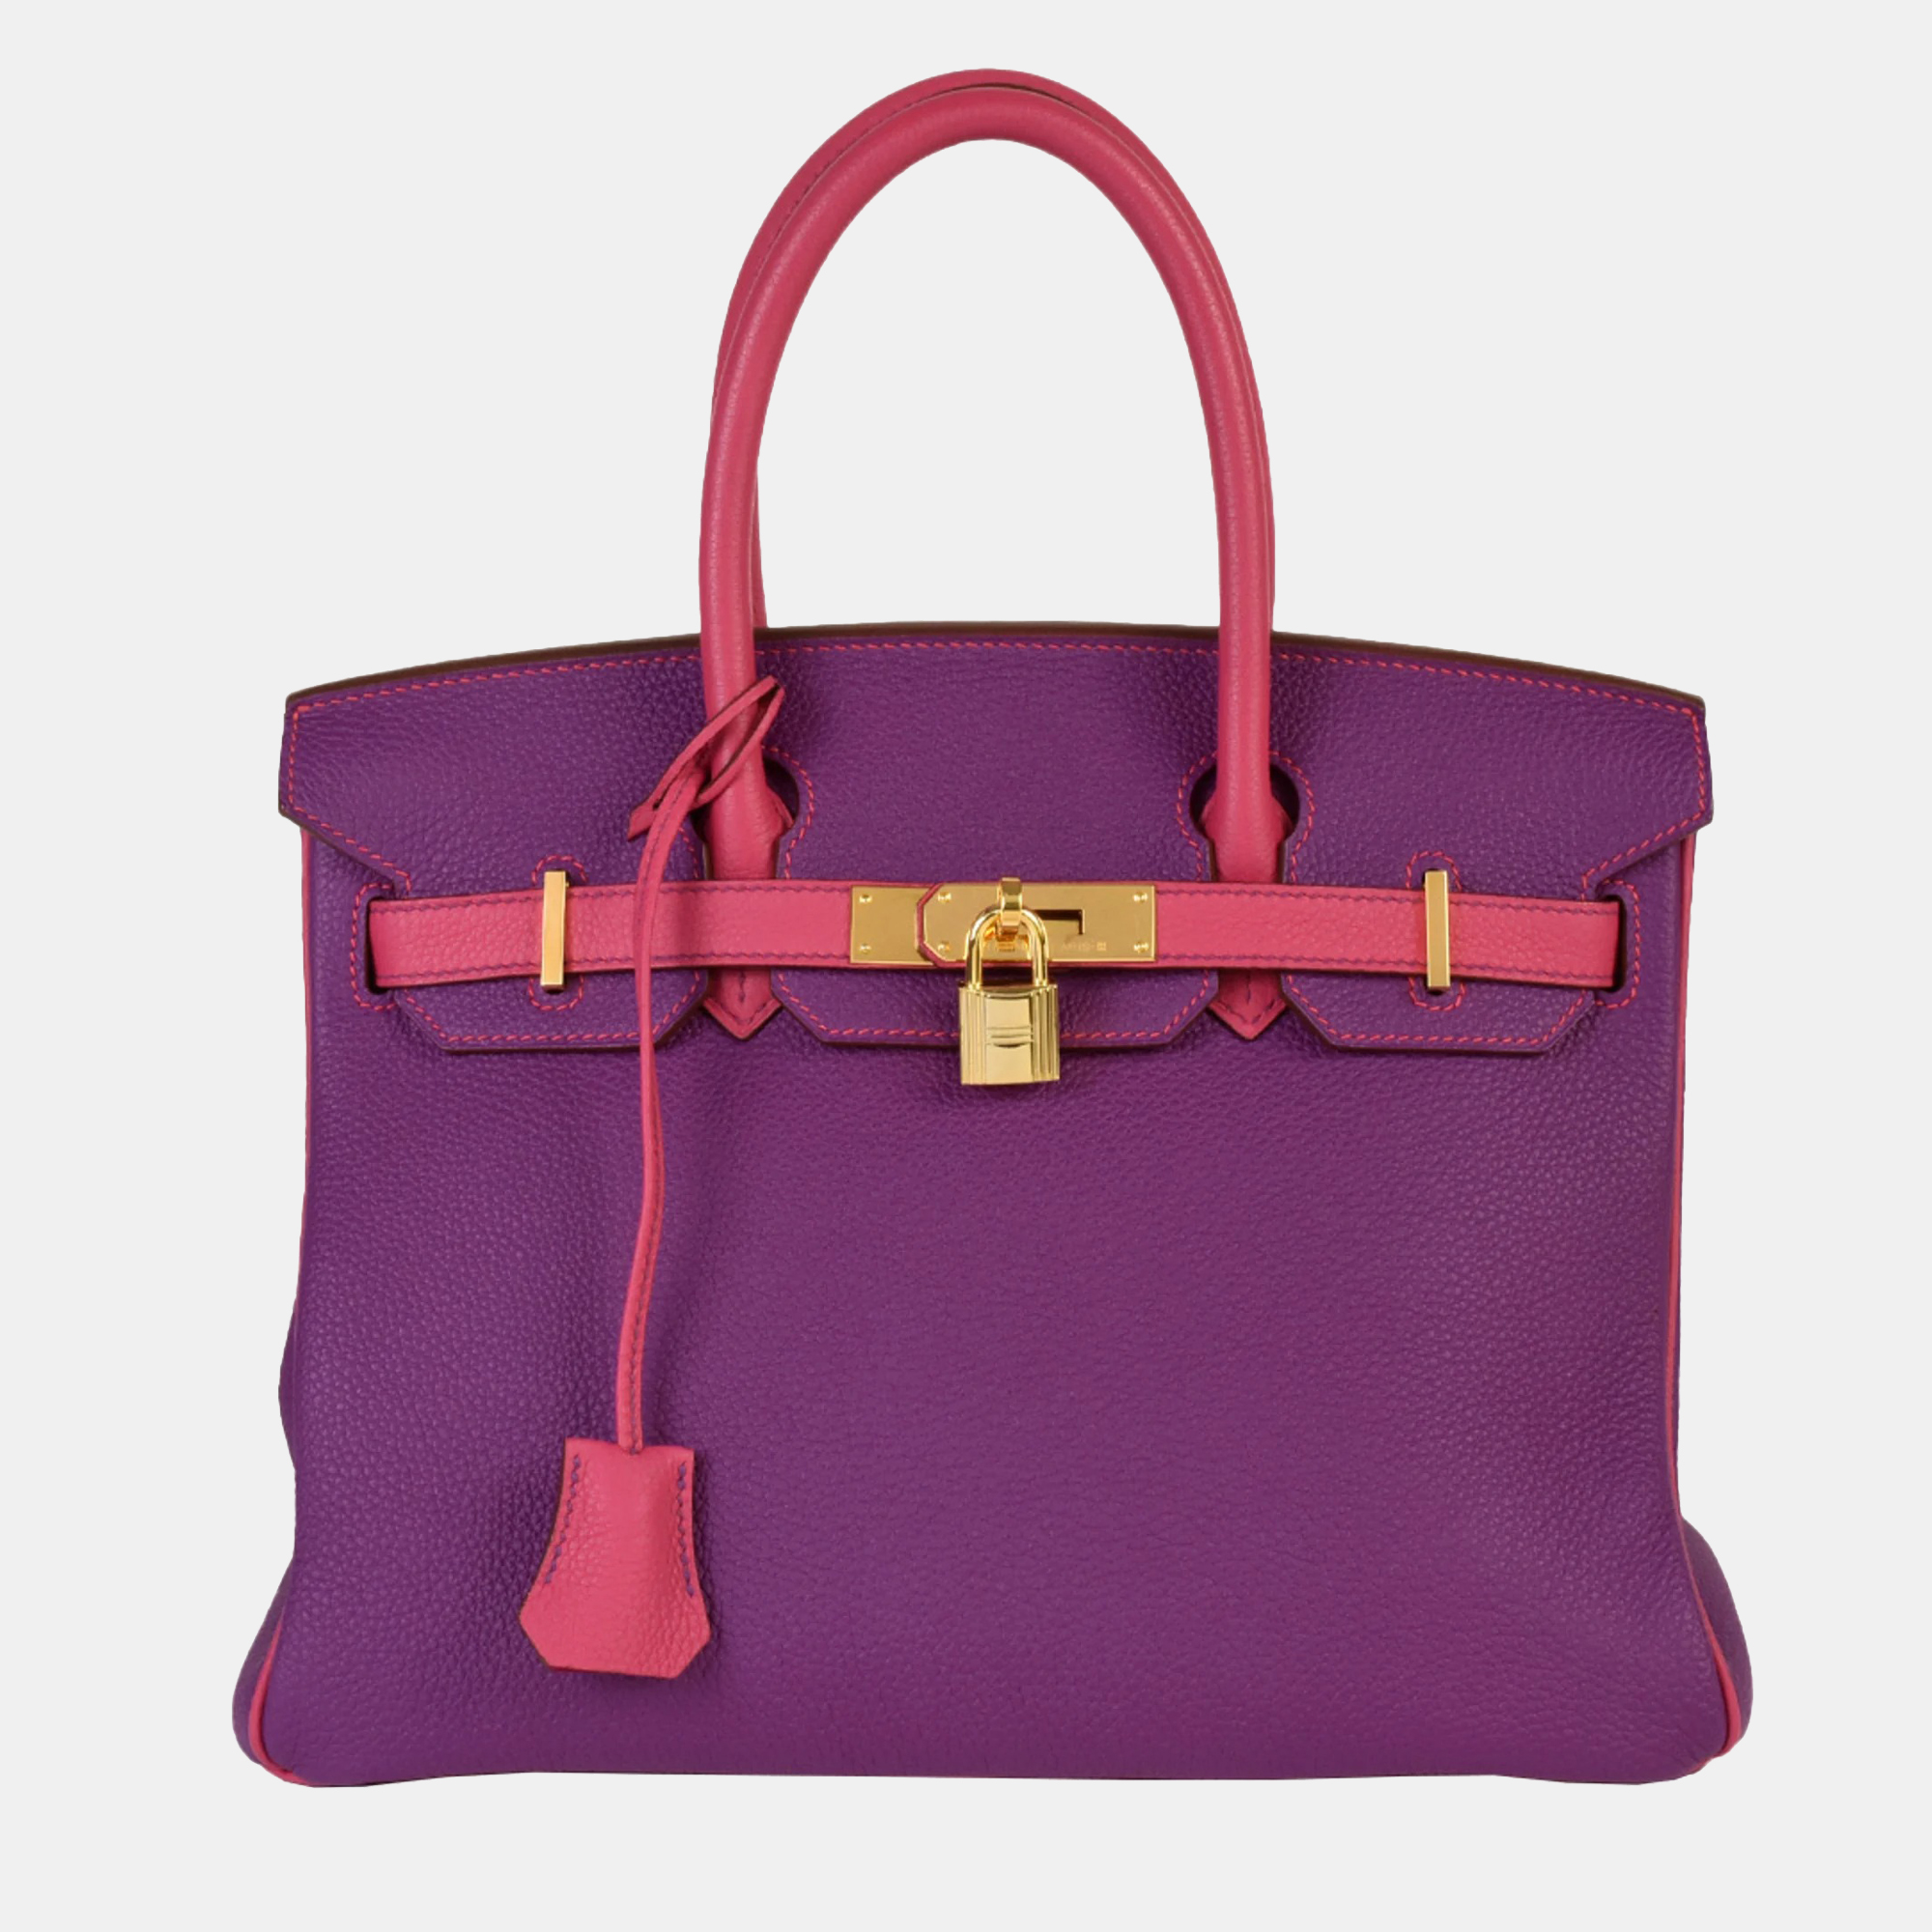 Hermes birkin 30 bicolor special order &acirc;&#150;&iexcl;m stamp (manufactured in 2009) togo purple x pink handbag